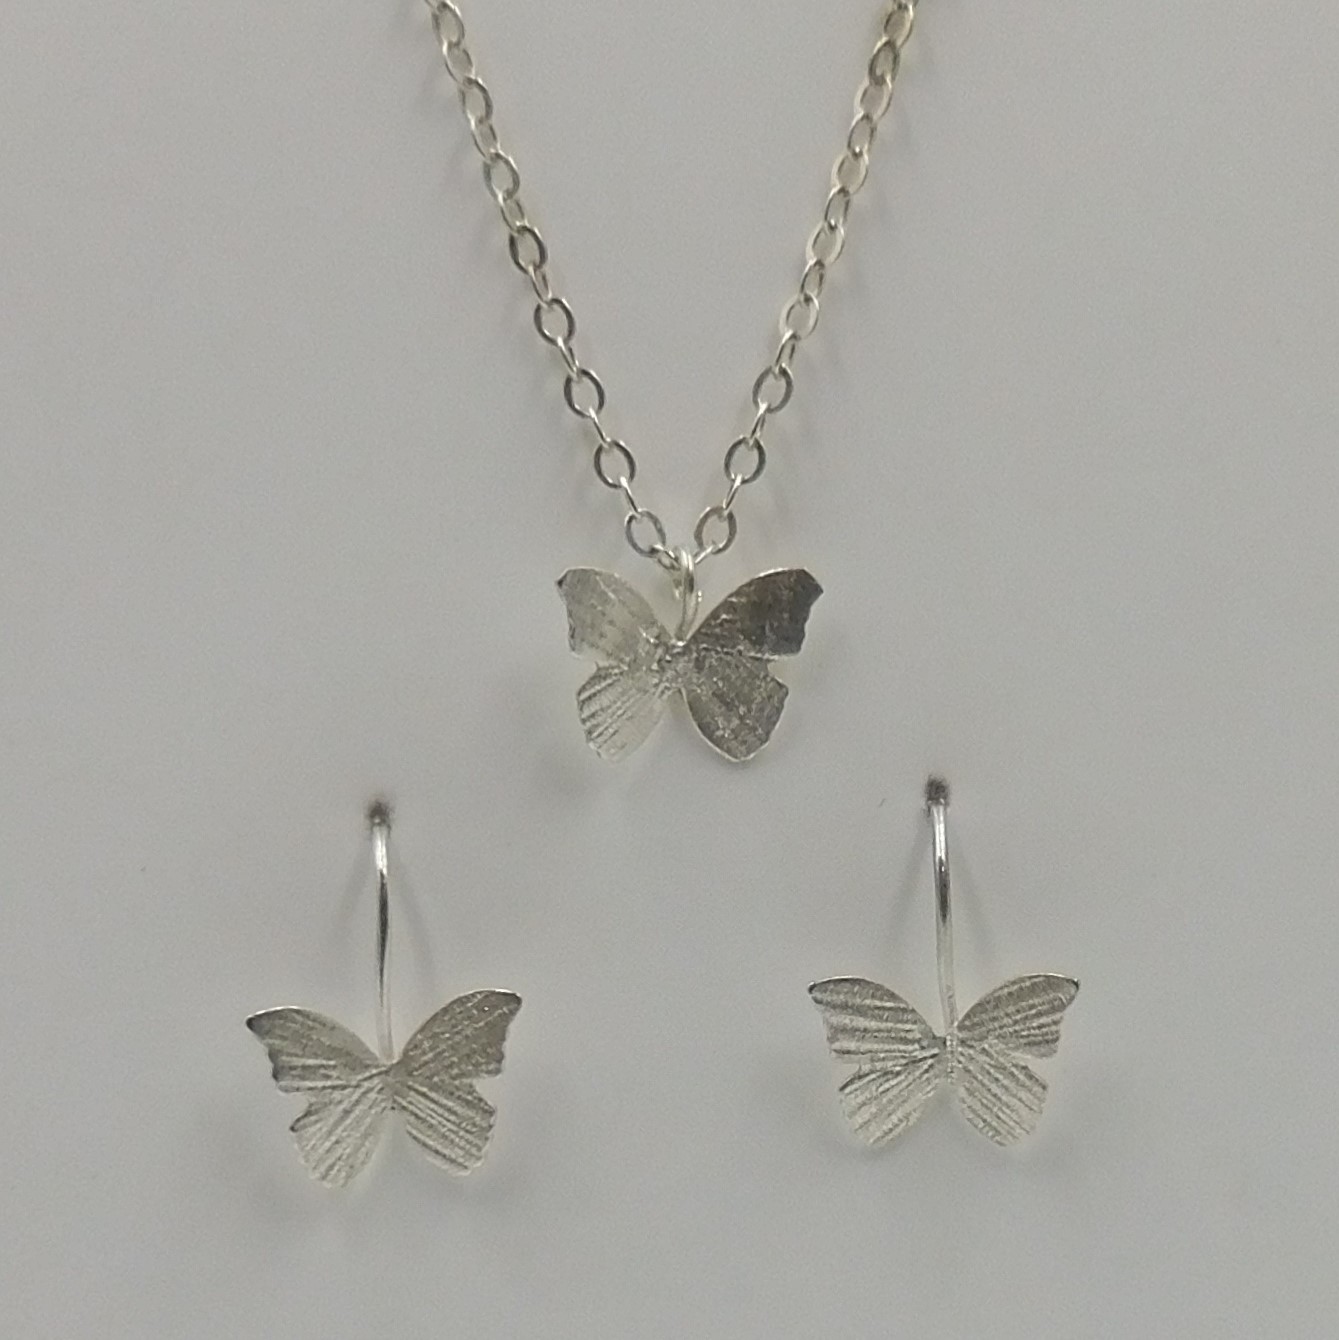 DKC-2033 Earring & Necklace Set-Butterflies $100 at Hunter Wolff Gallery